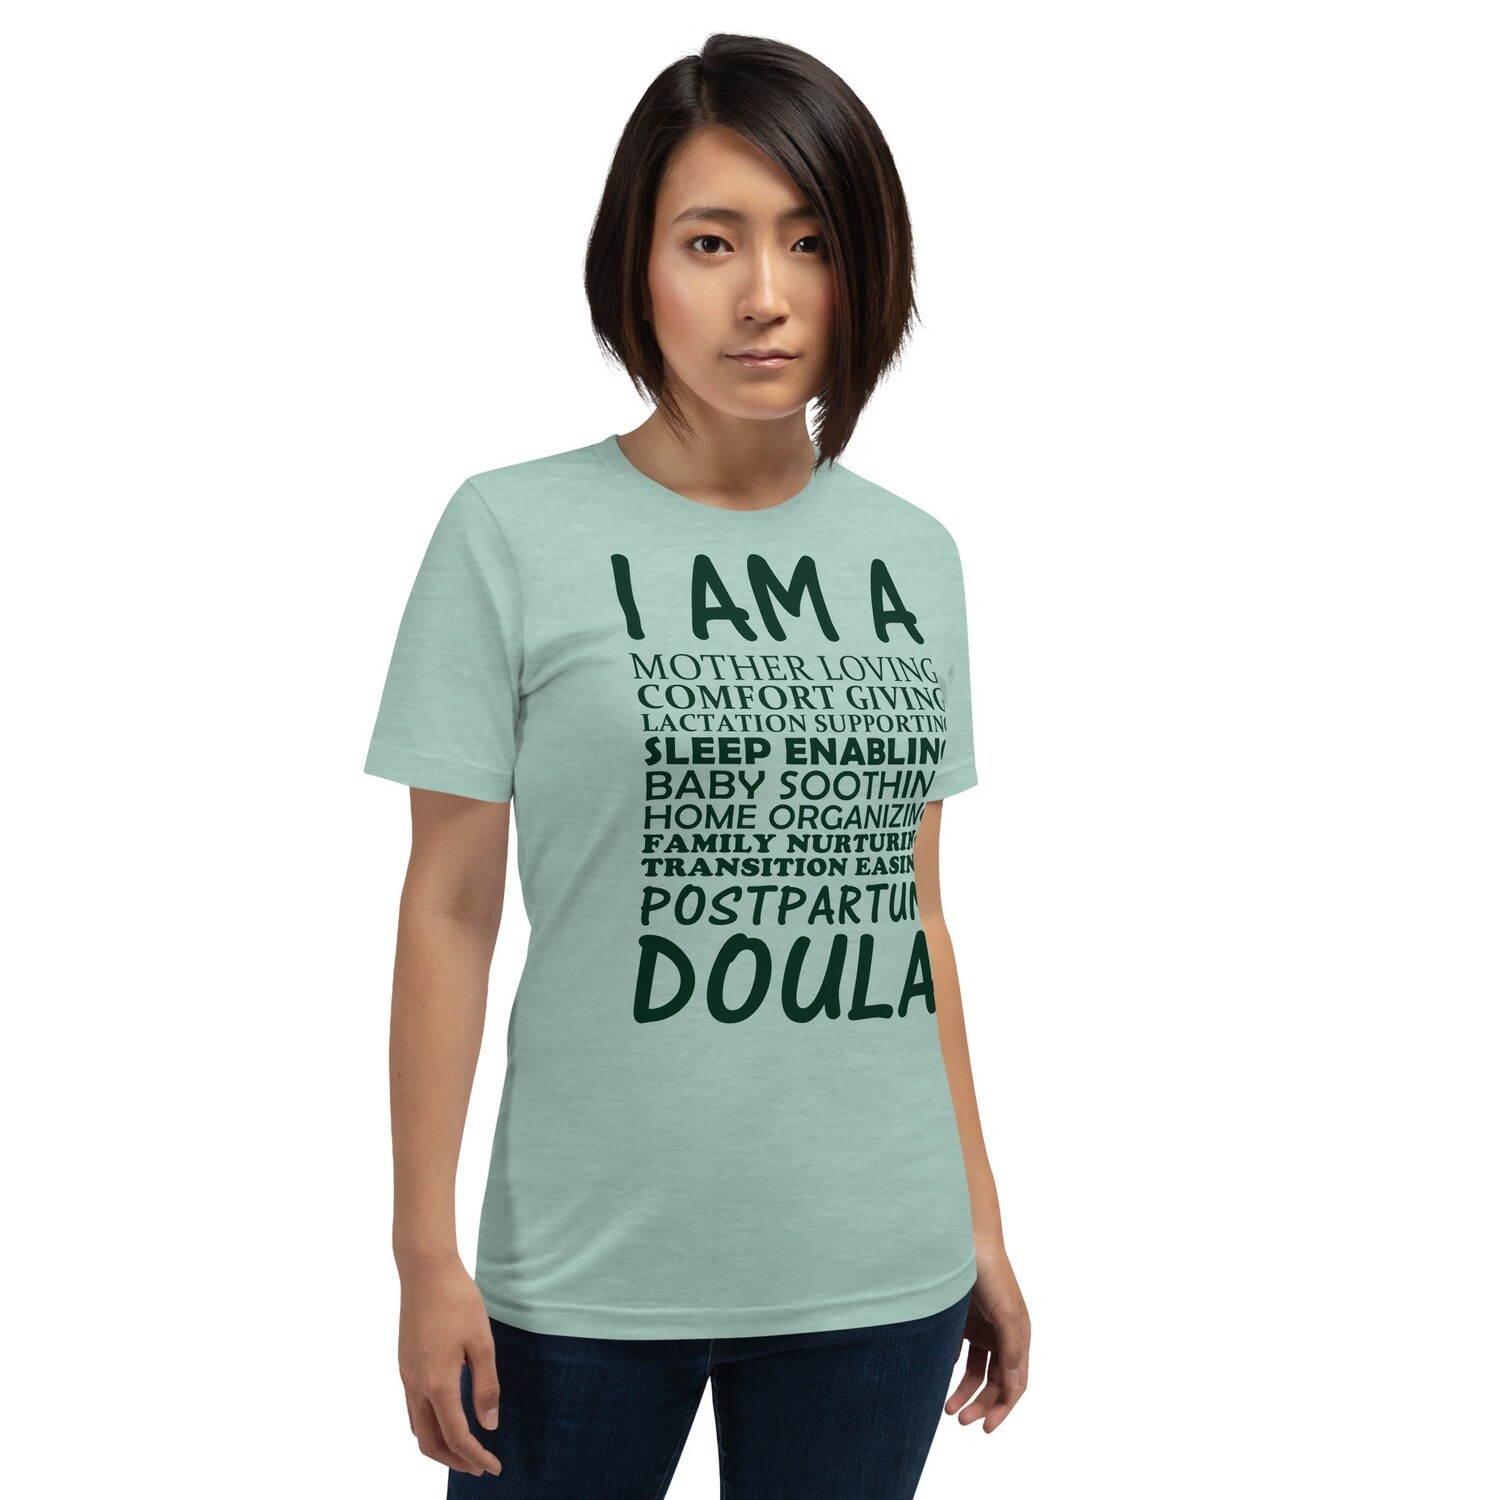 I am a Postpartum Doula T-Shirt - Light Colors